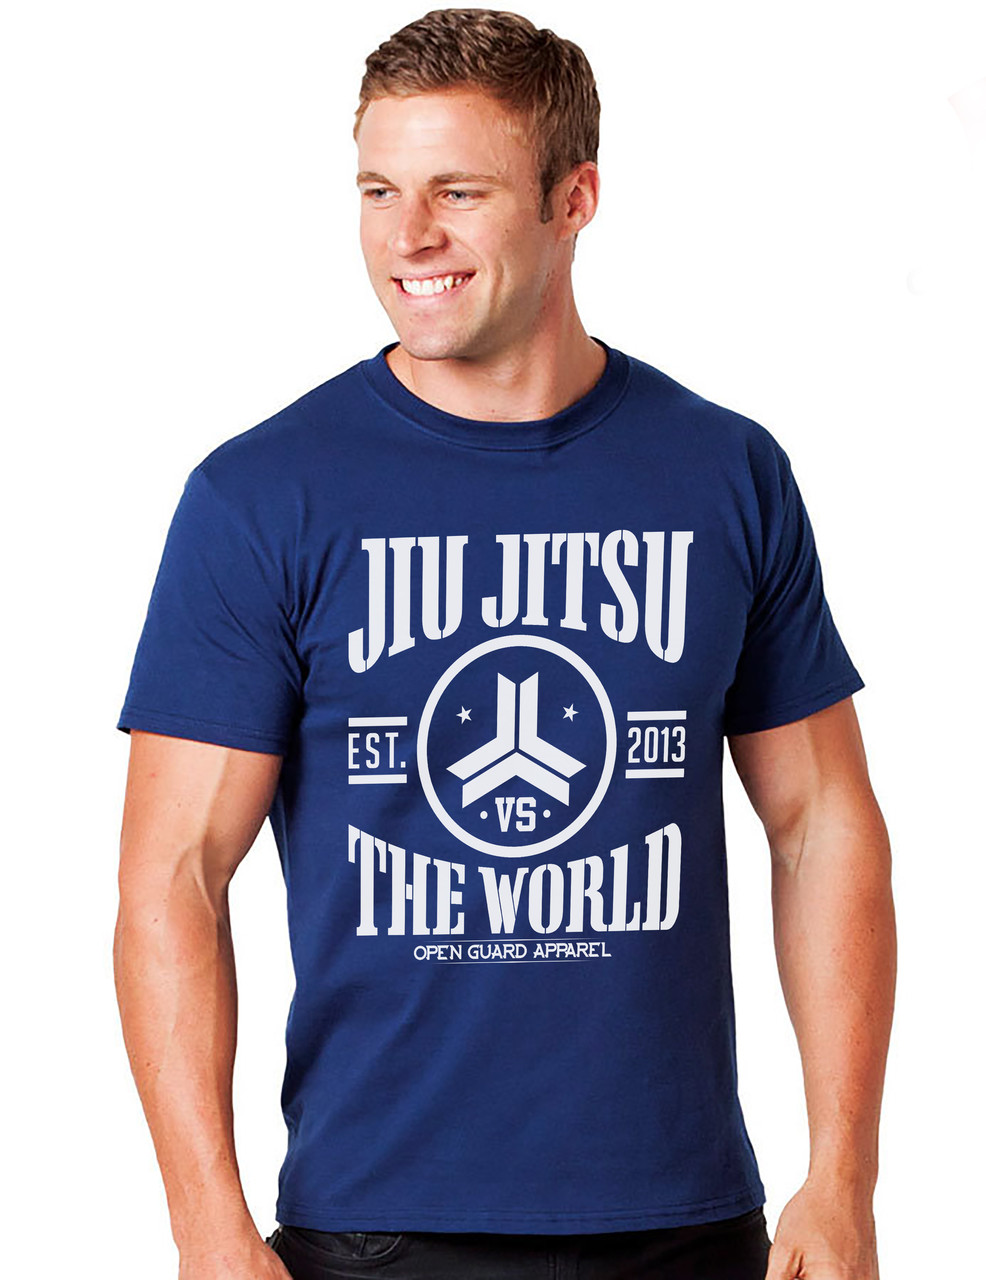 OGA Jiu Jitsu VS The World Storm Blue Heather T-Shirt.  Available at www.thejiujitsushop.com

Open Guard Apparel